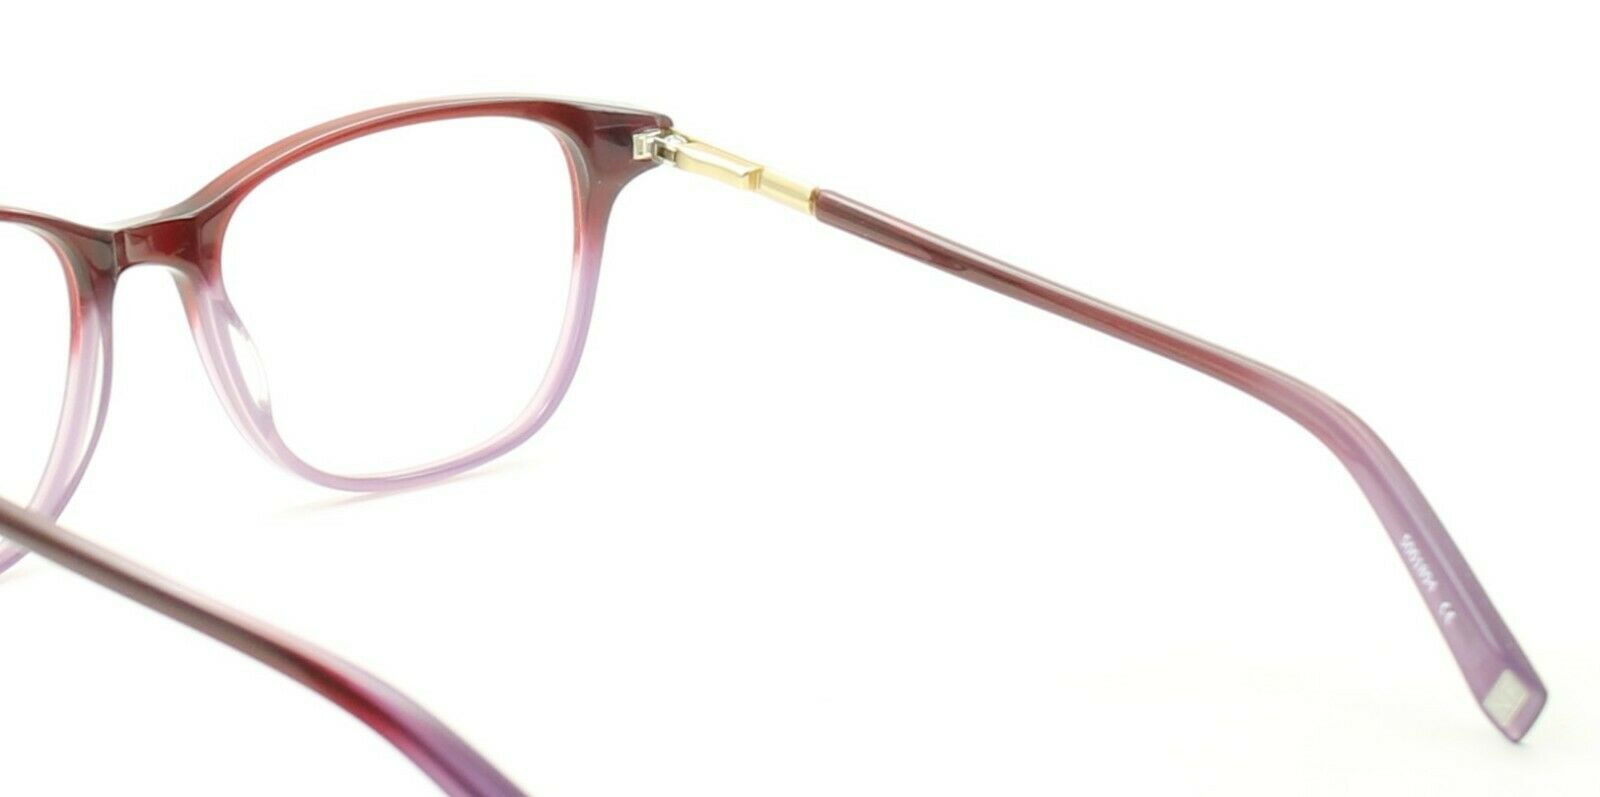 Nicole Farhi 08 30565562 50mm Eyewear Glasses RX Optical Eyeglasses FRAMES - New